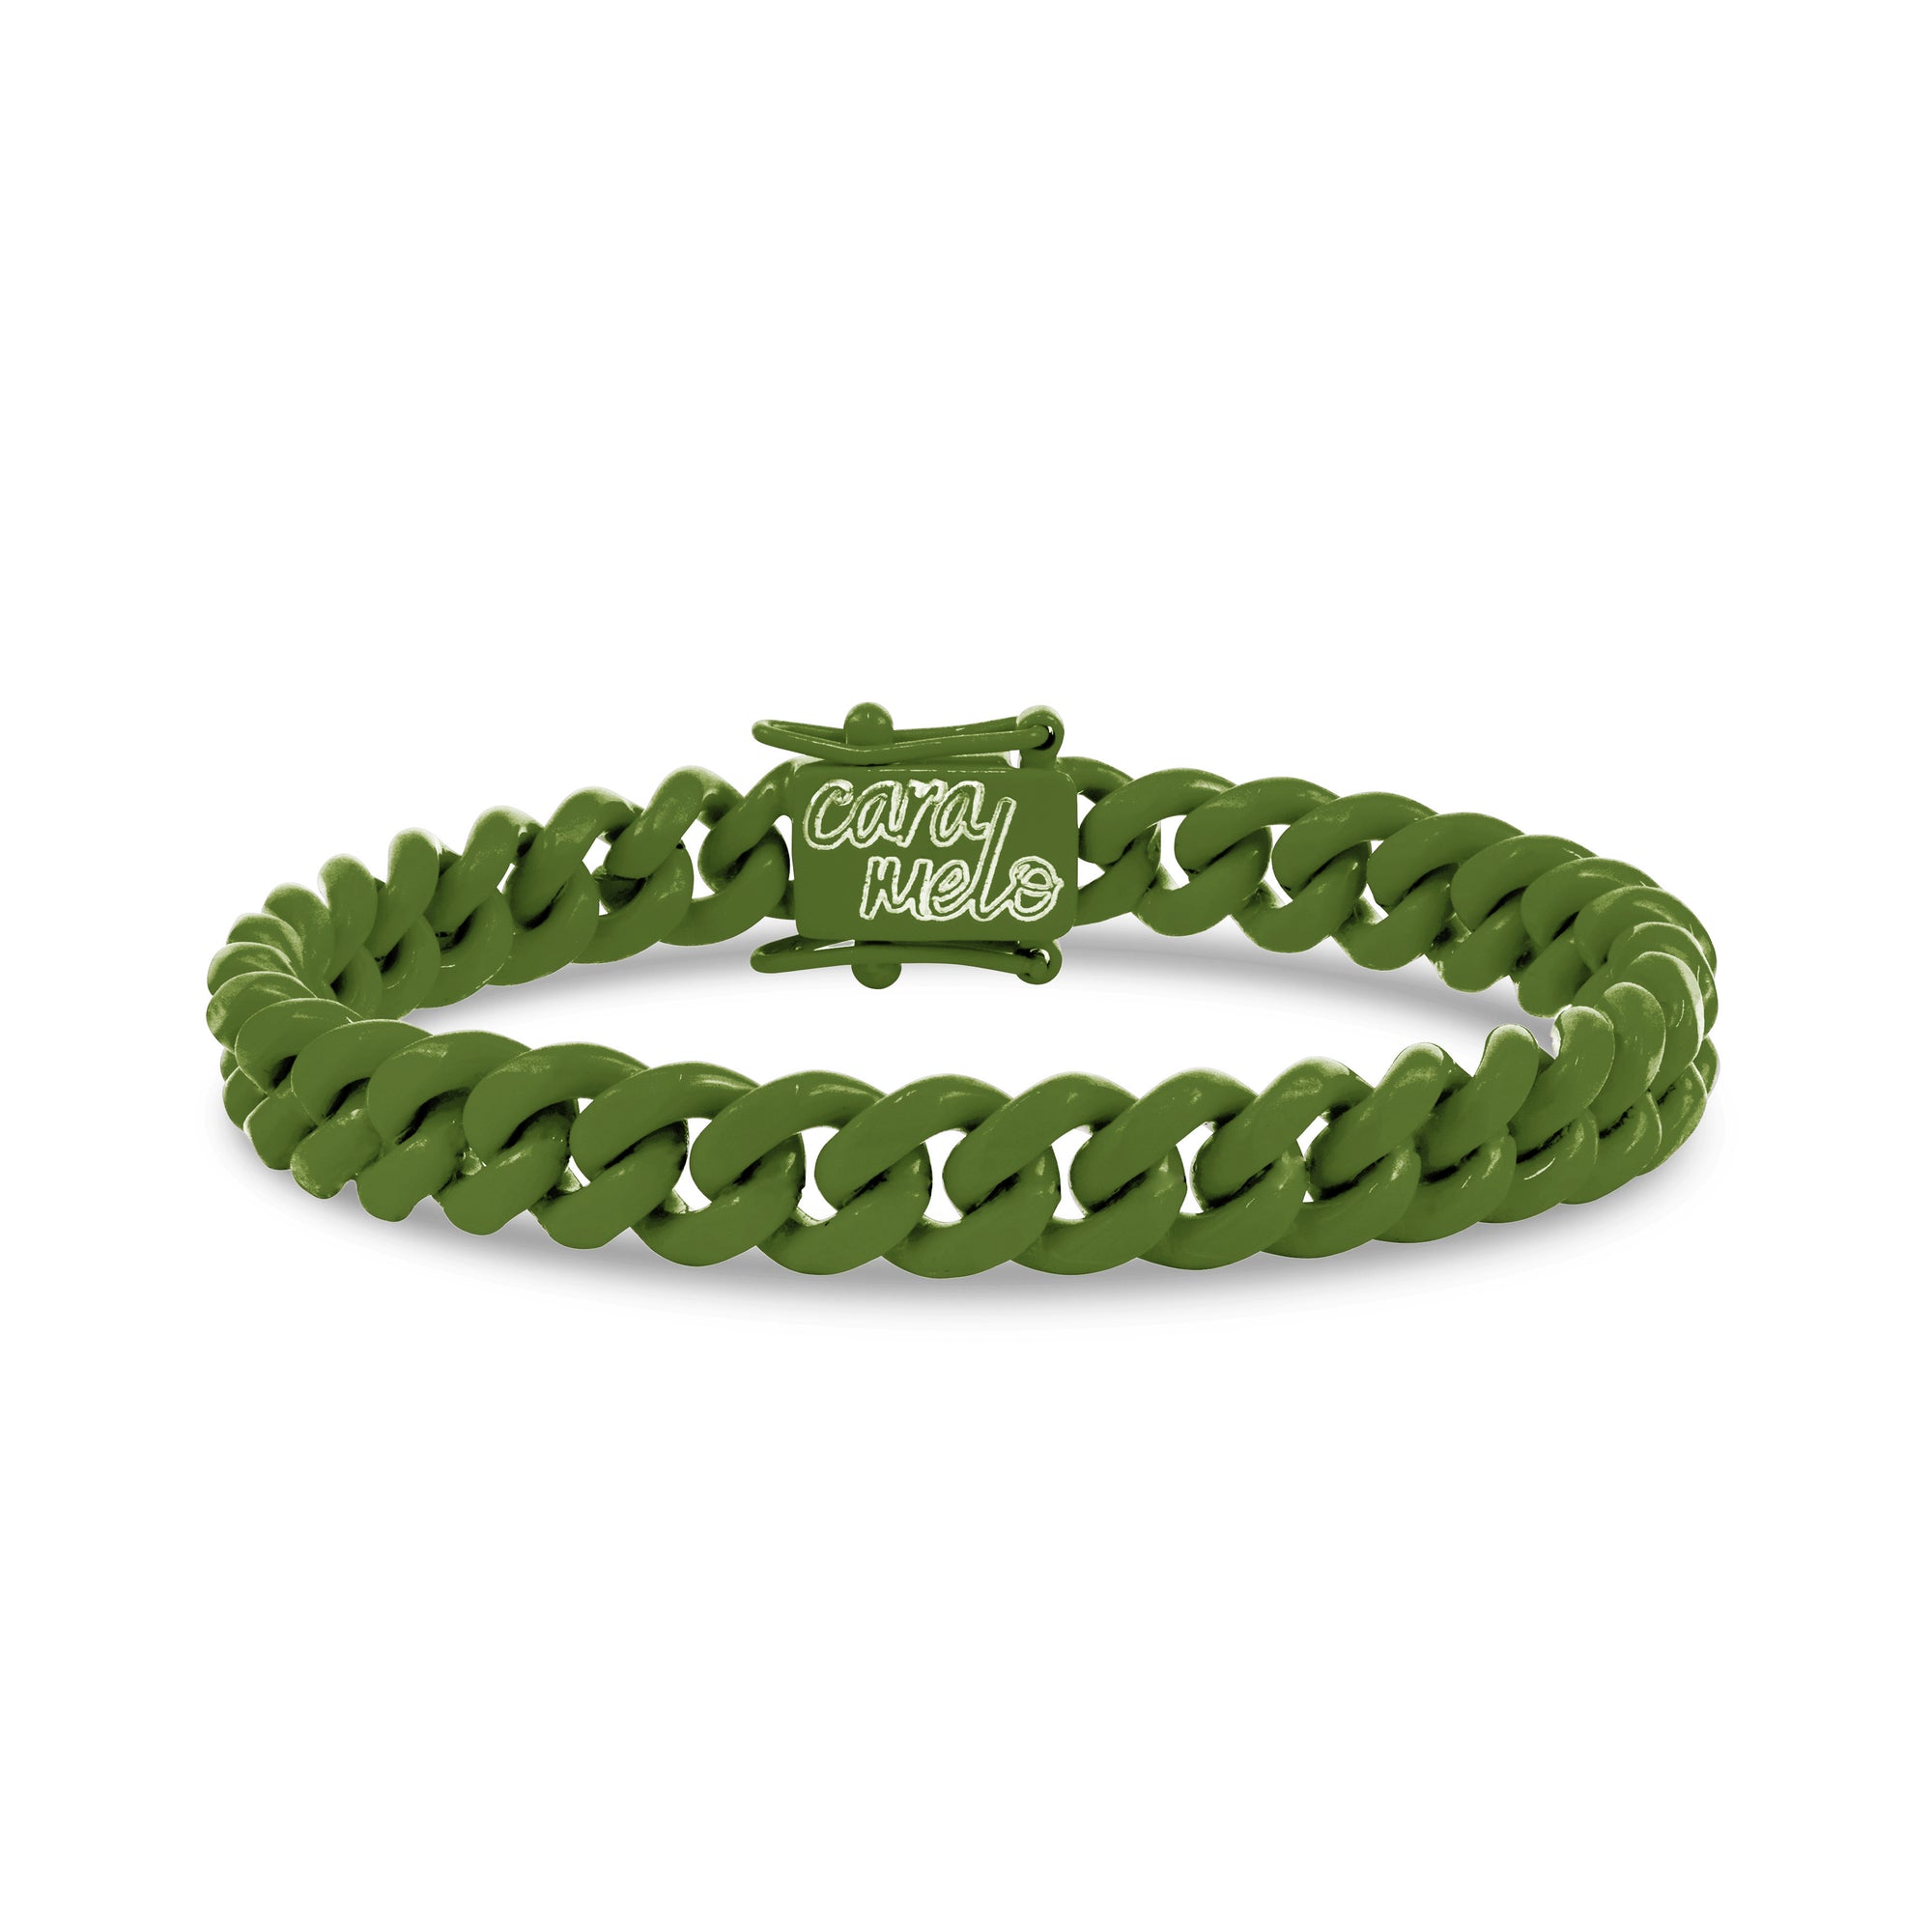 Tactical_Army_Green_Cuban_Link_Bracelet_12mm_Wide_Custom_High_Quality_Fashion_Designer_Bracelets_CARAMELO_CHAINS